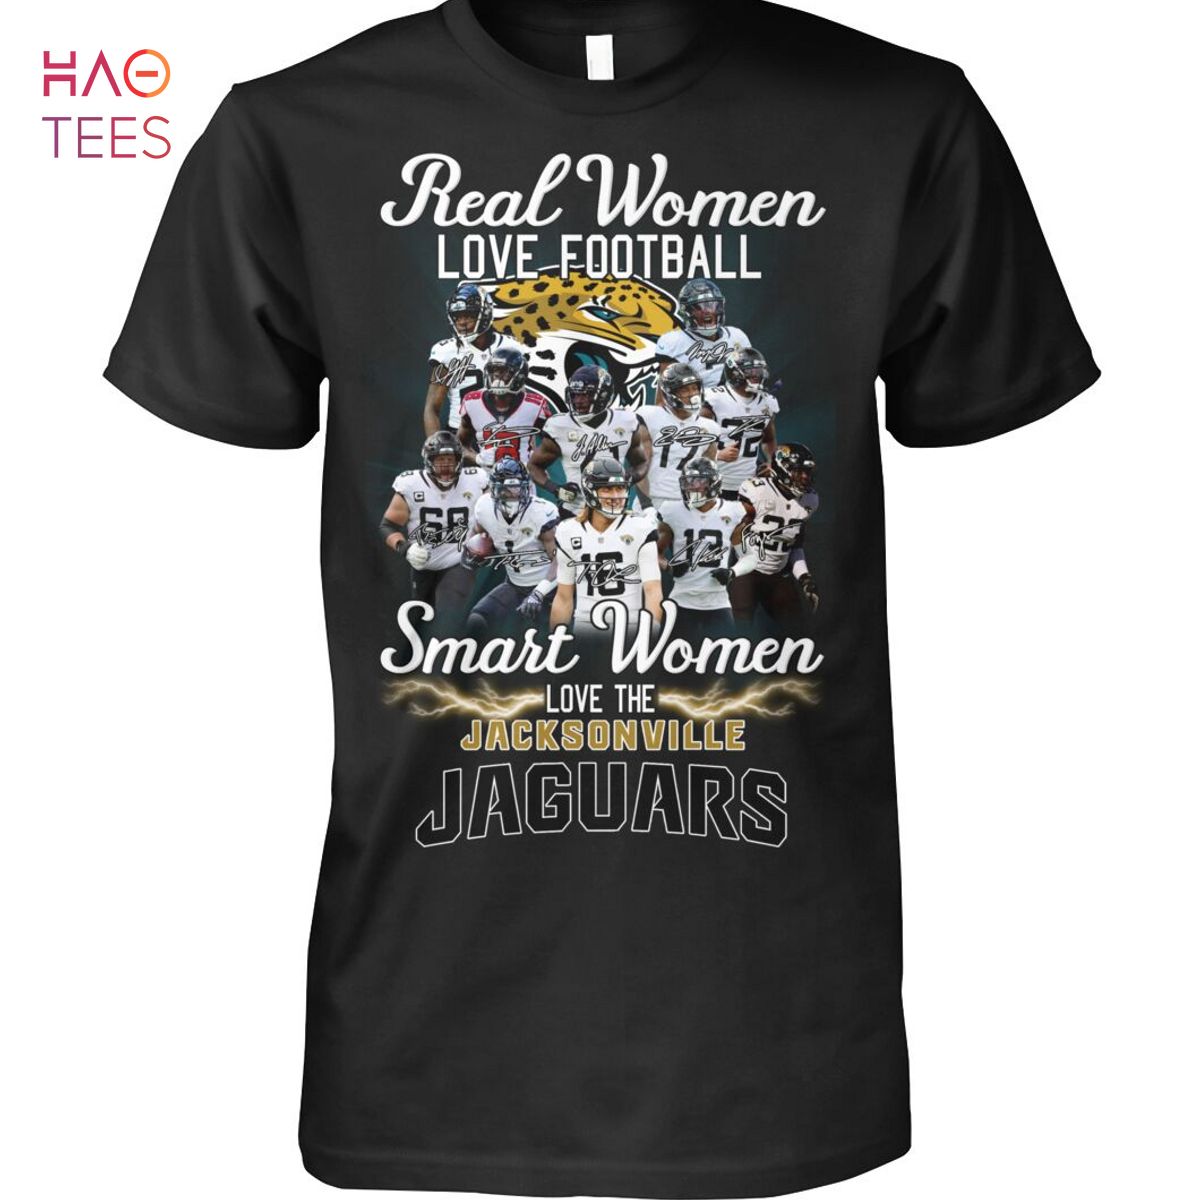 Love Football Love The Jacksonville Jagurs Shirt